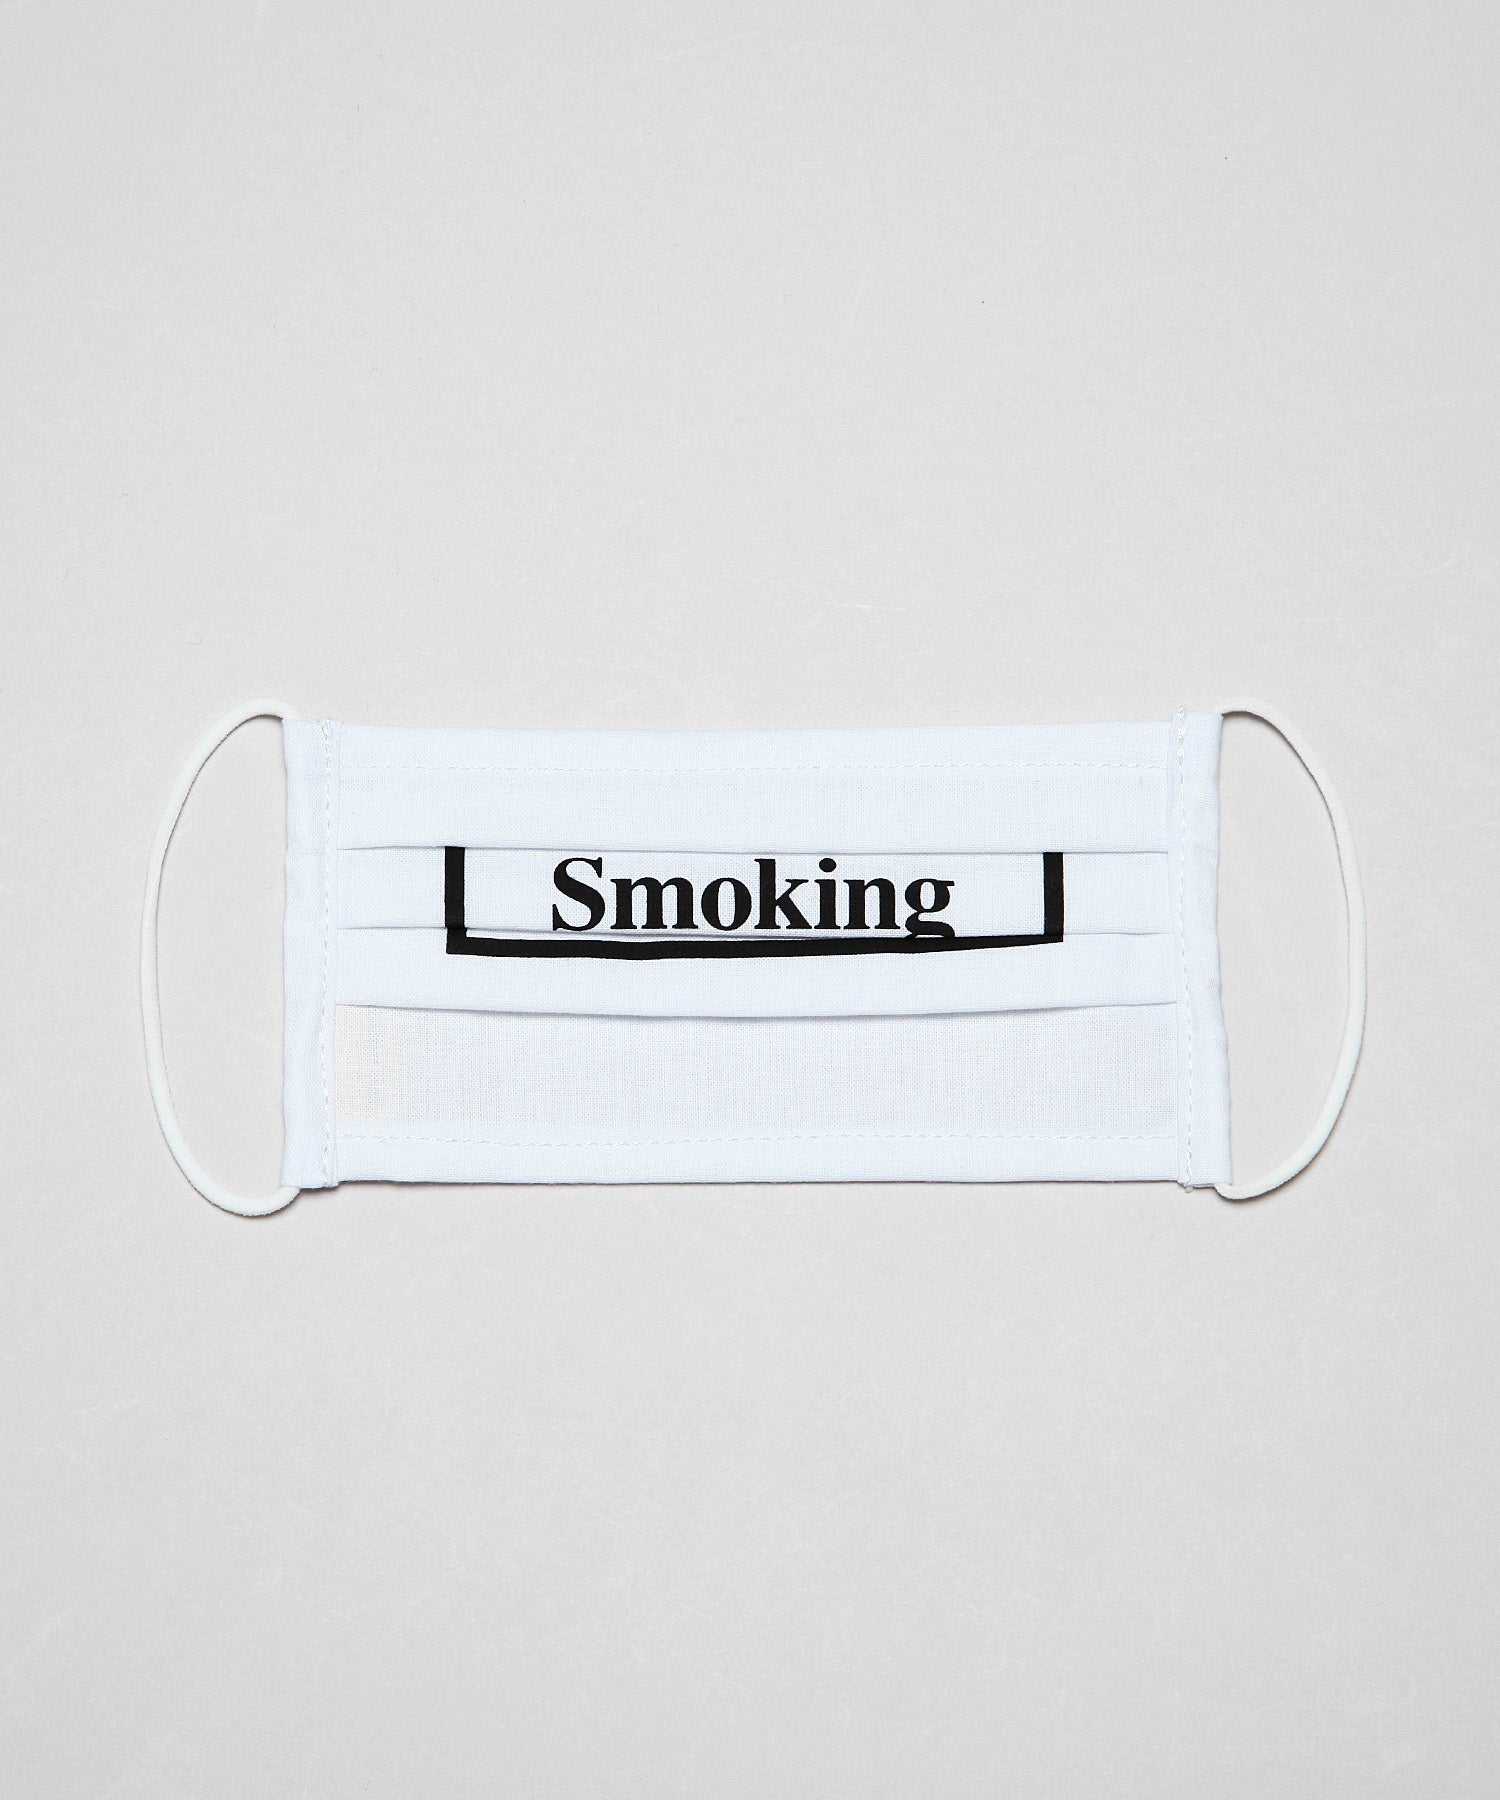 Smoking kills LOGO MASK [FRA229]